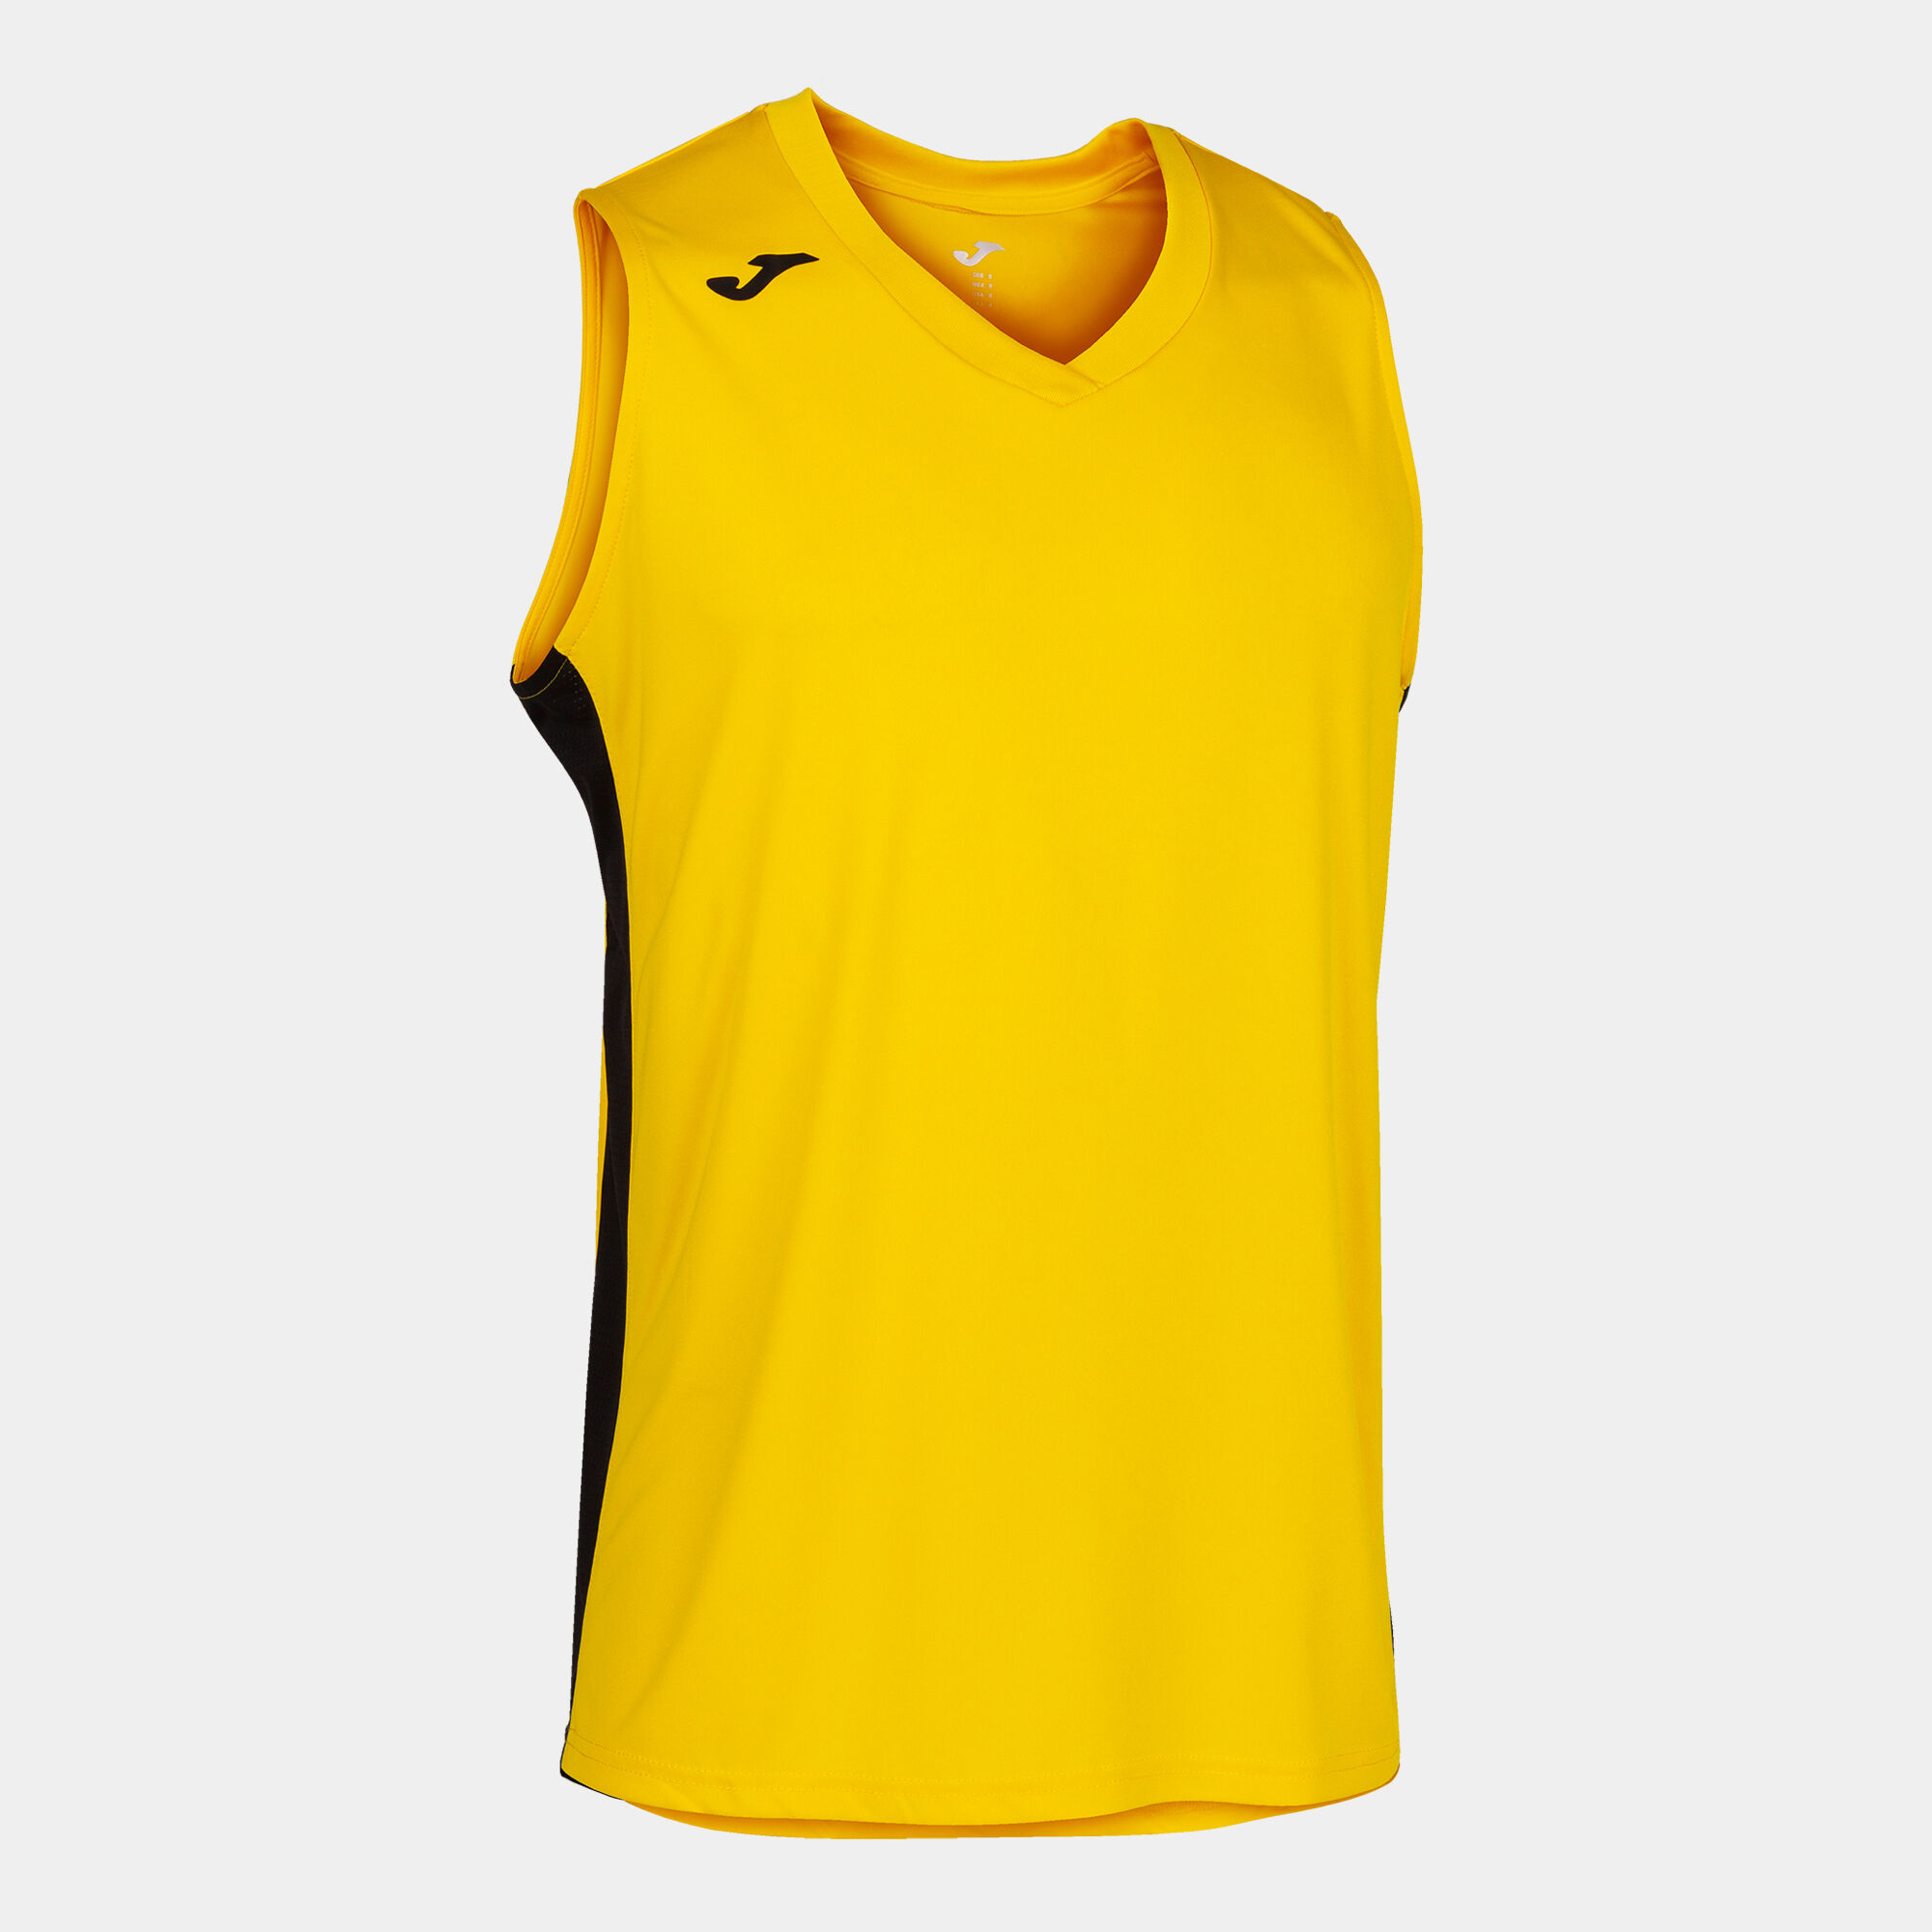 Shirt s/m mann Cancha III gelb schwarz